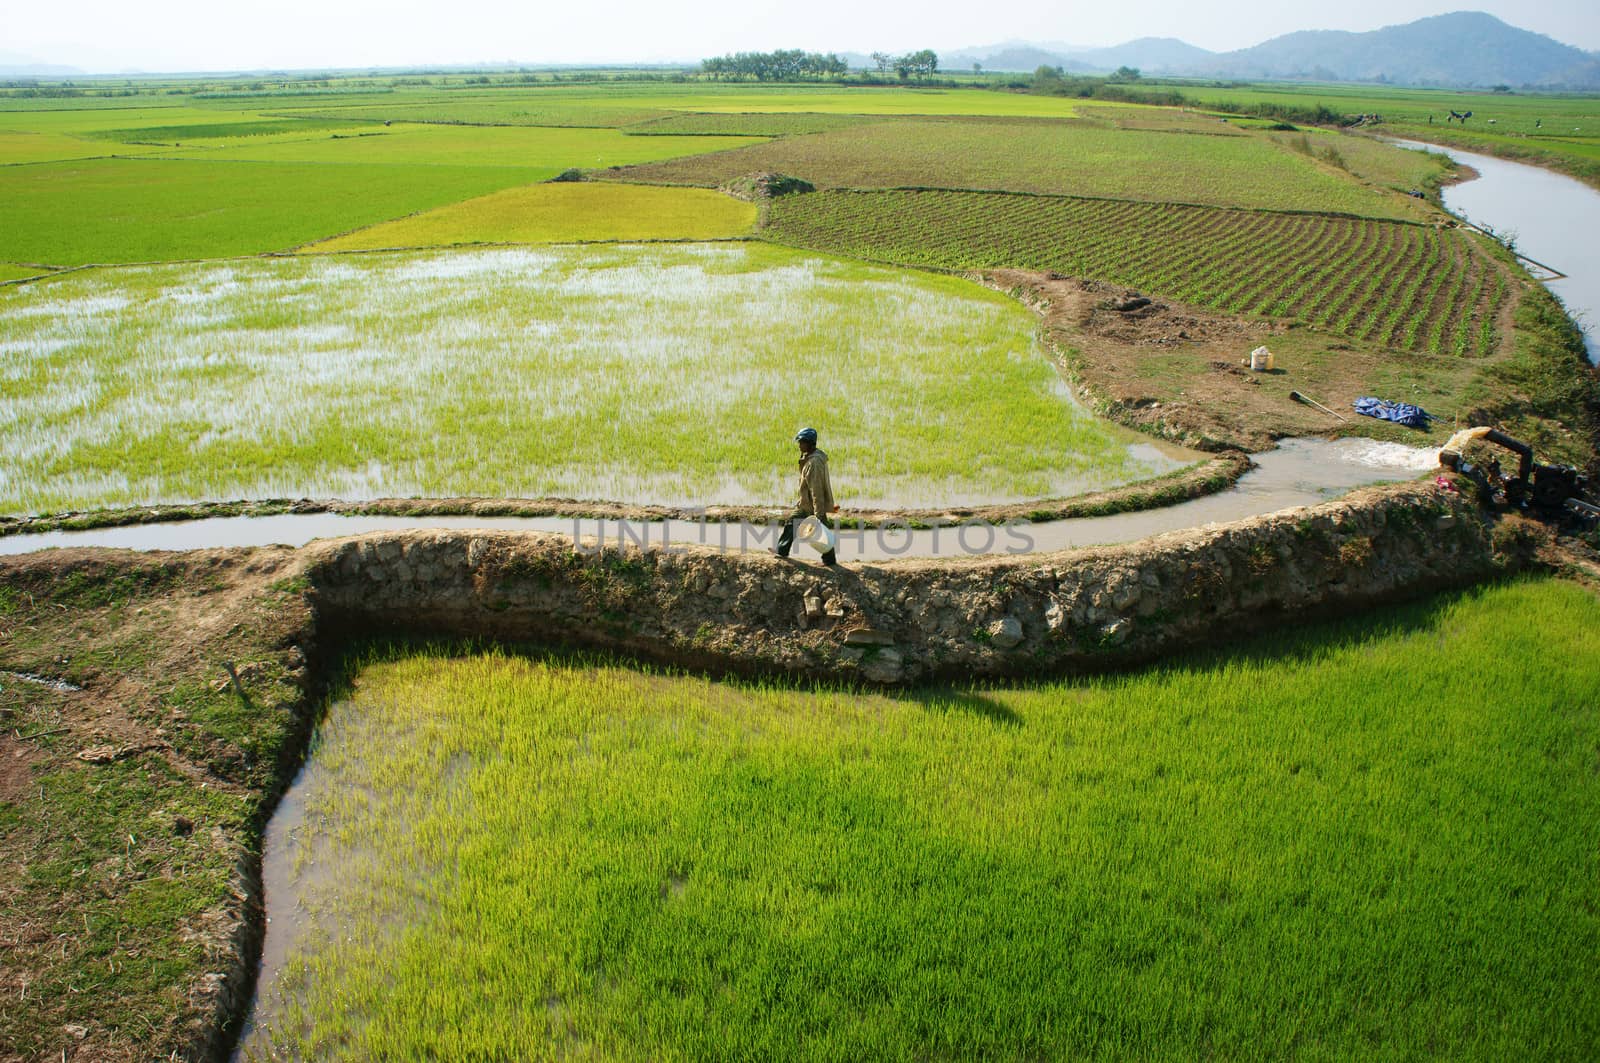  DAKLAK, VIETNAM- FEB 7: Farmer pump water to rice field for crop, he walk on dike, impression of vast paddy plantation with irrigation canal system, Viet Nam, Feb 7, 2014                           